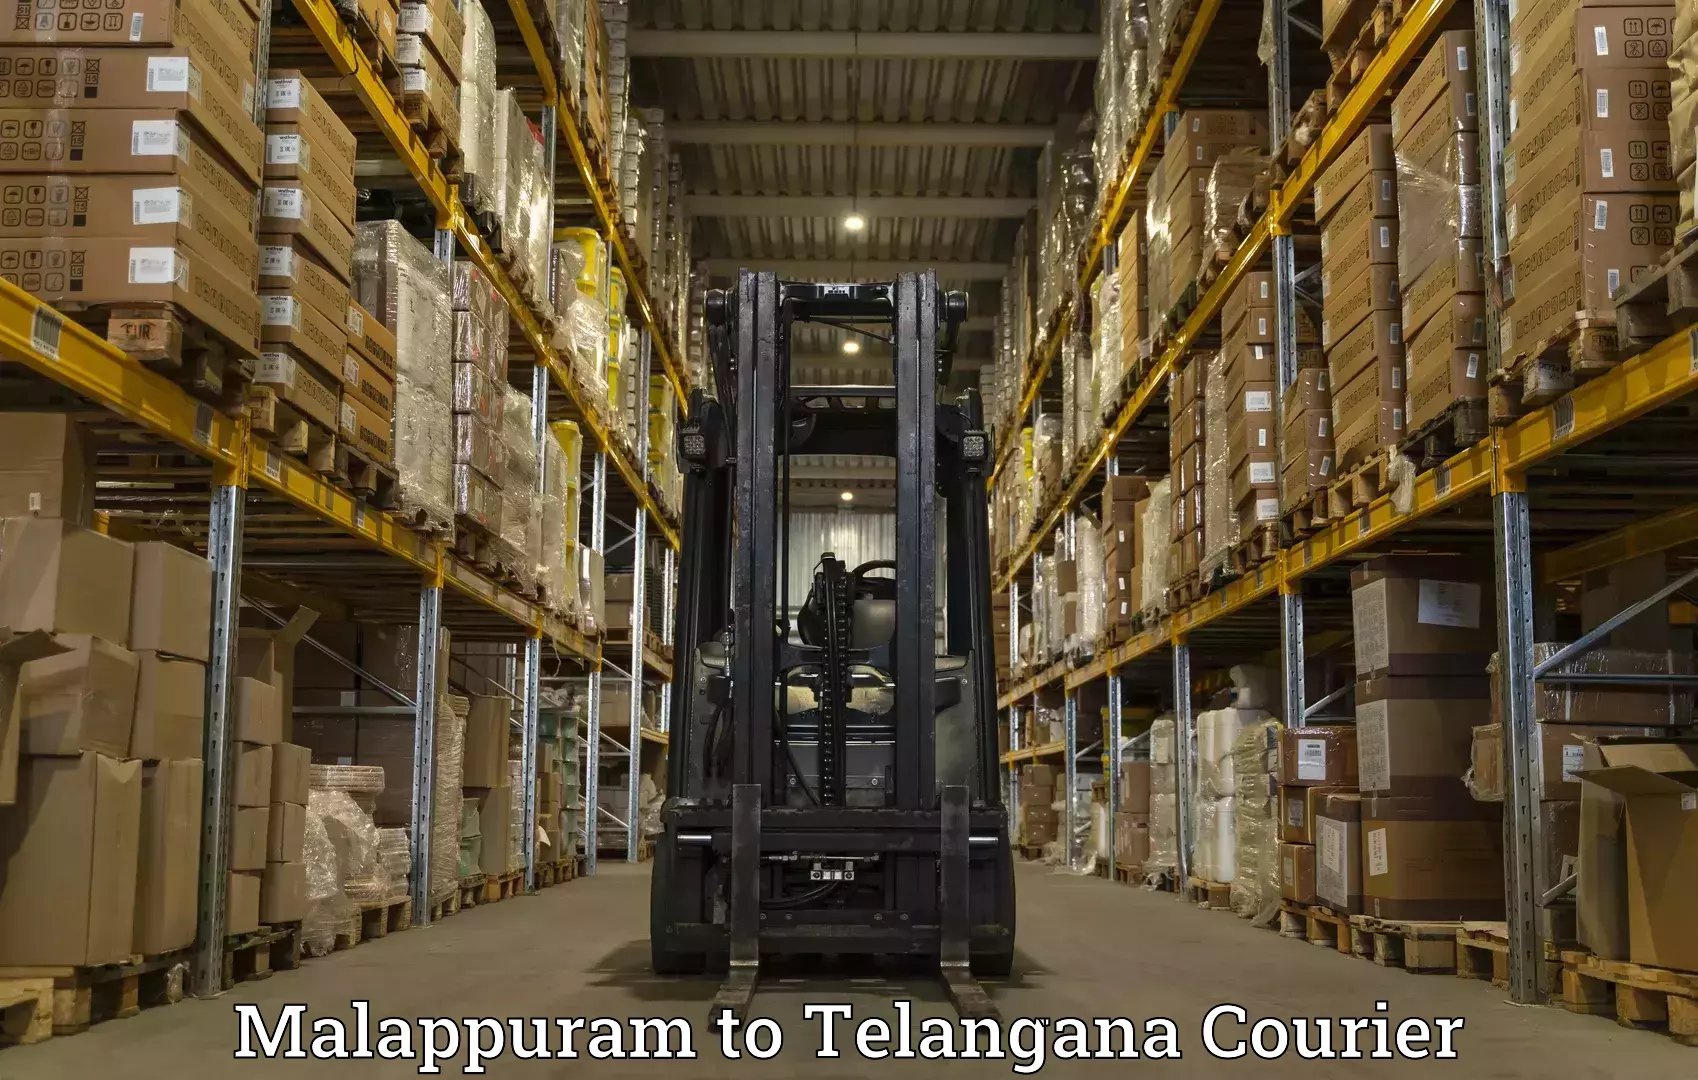 Courier service innovation Malappuram to Rudrangi